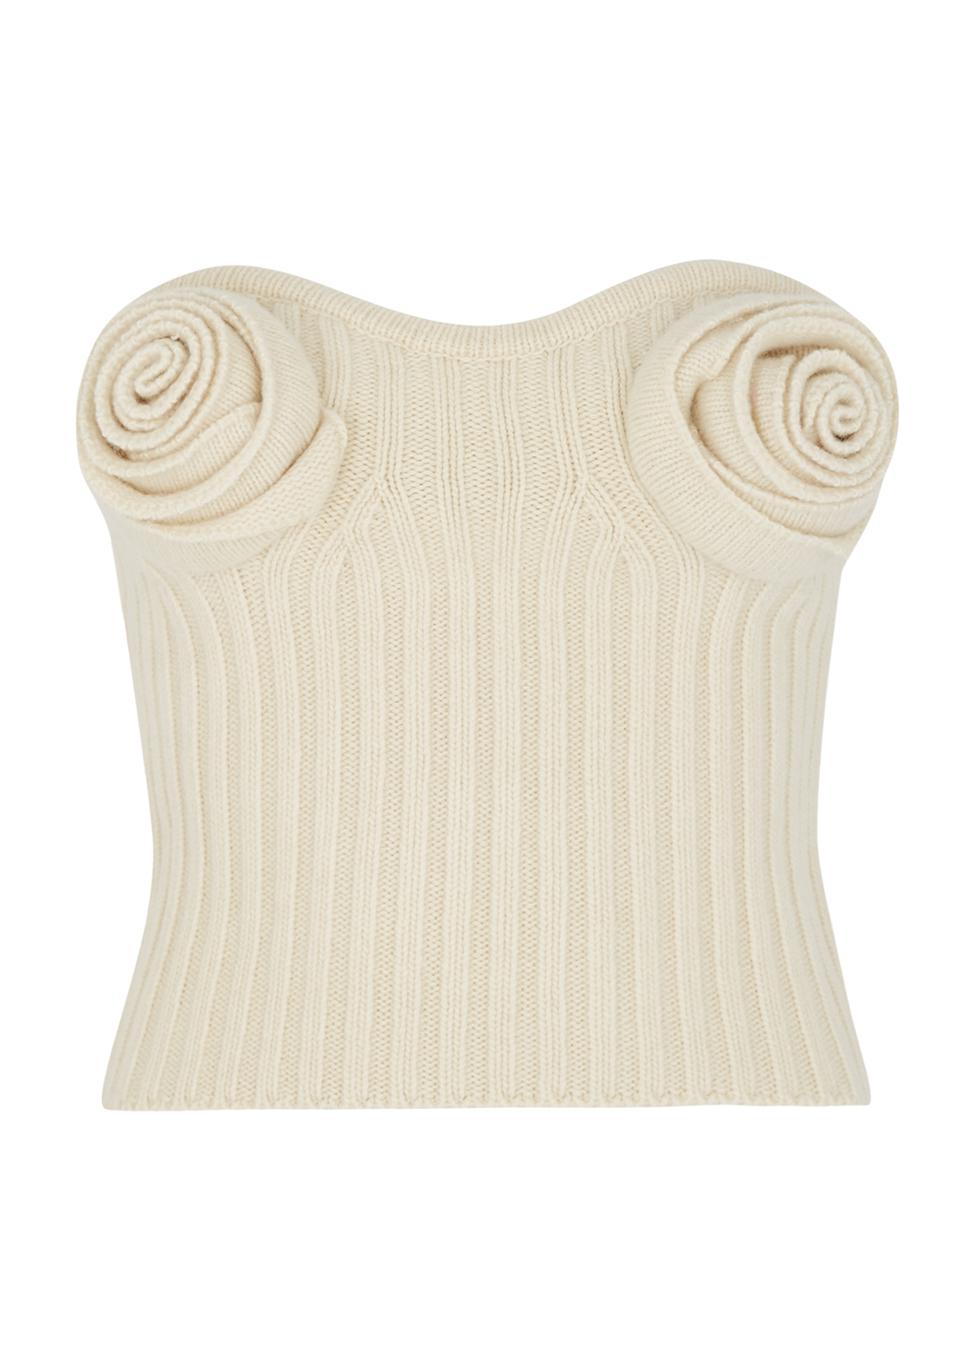 Rose-appliquéd strapless wool top by BLUMARINE